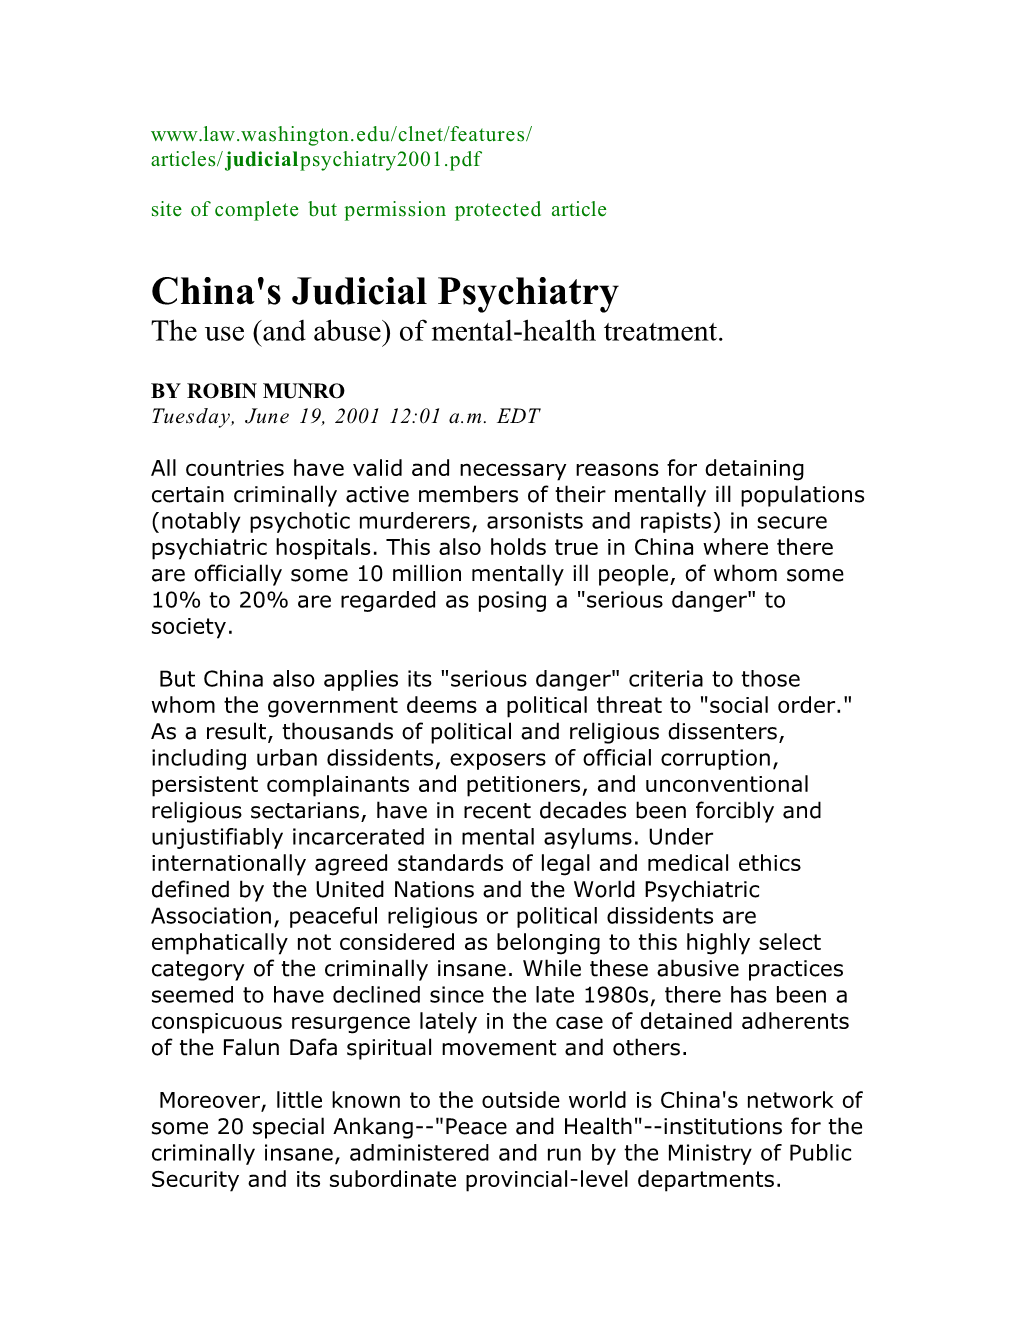 China's Judicial Psychiatry